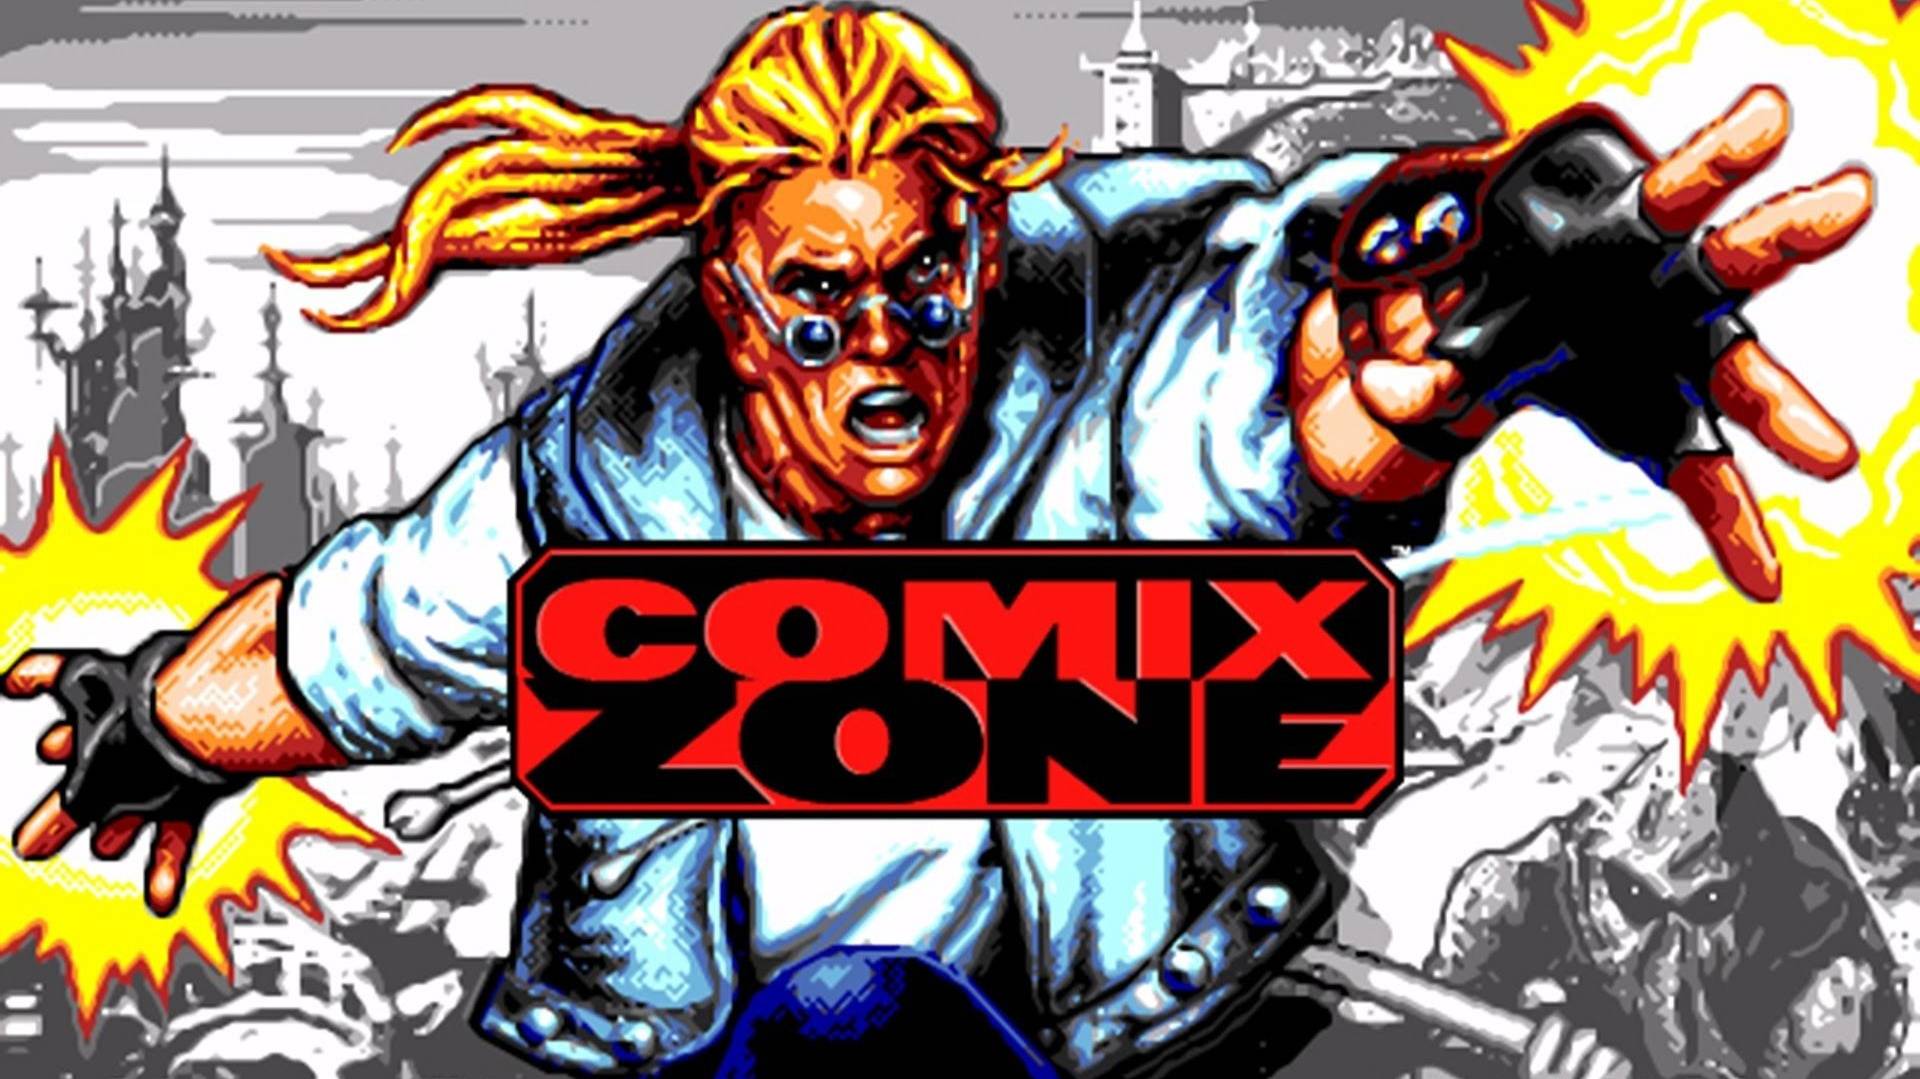 Comix Zone (Sega Mega Drive (Genesis)) - Полное прохождение (LongPlay)